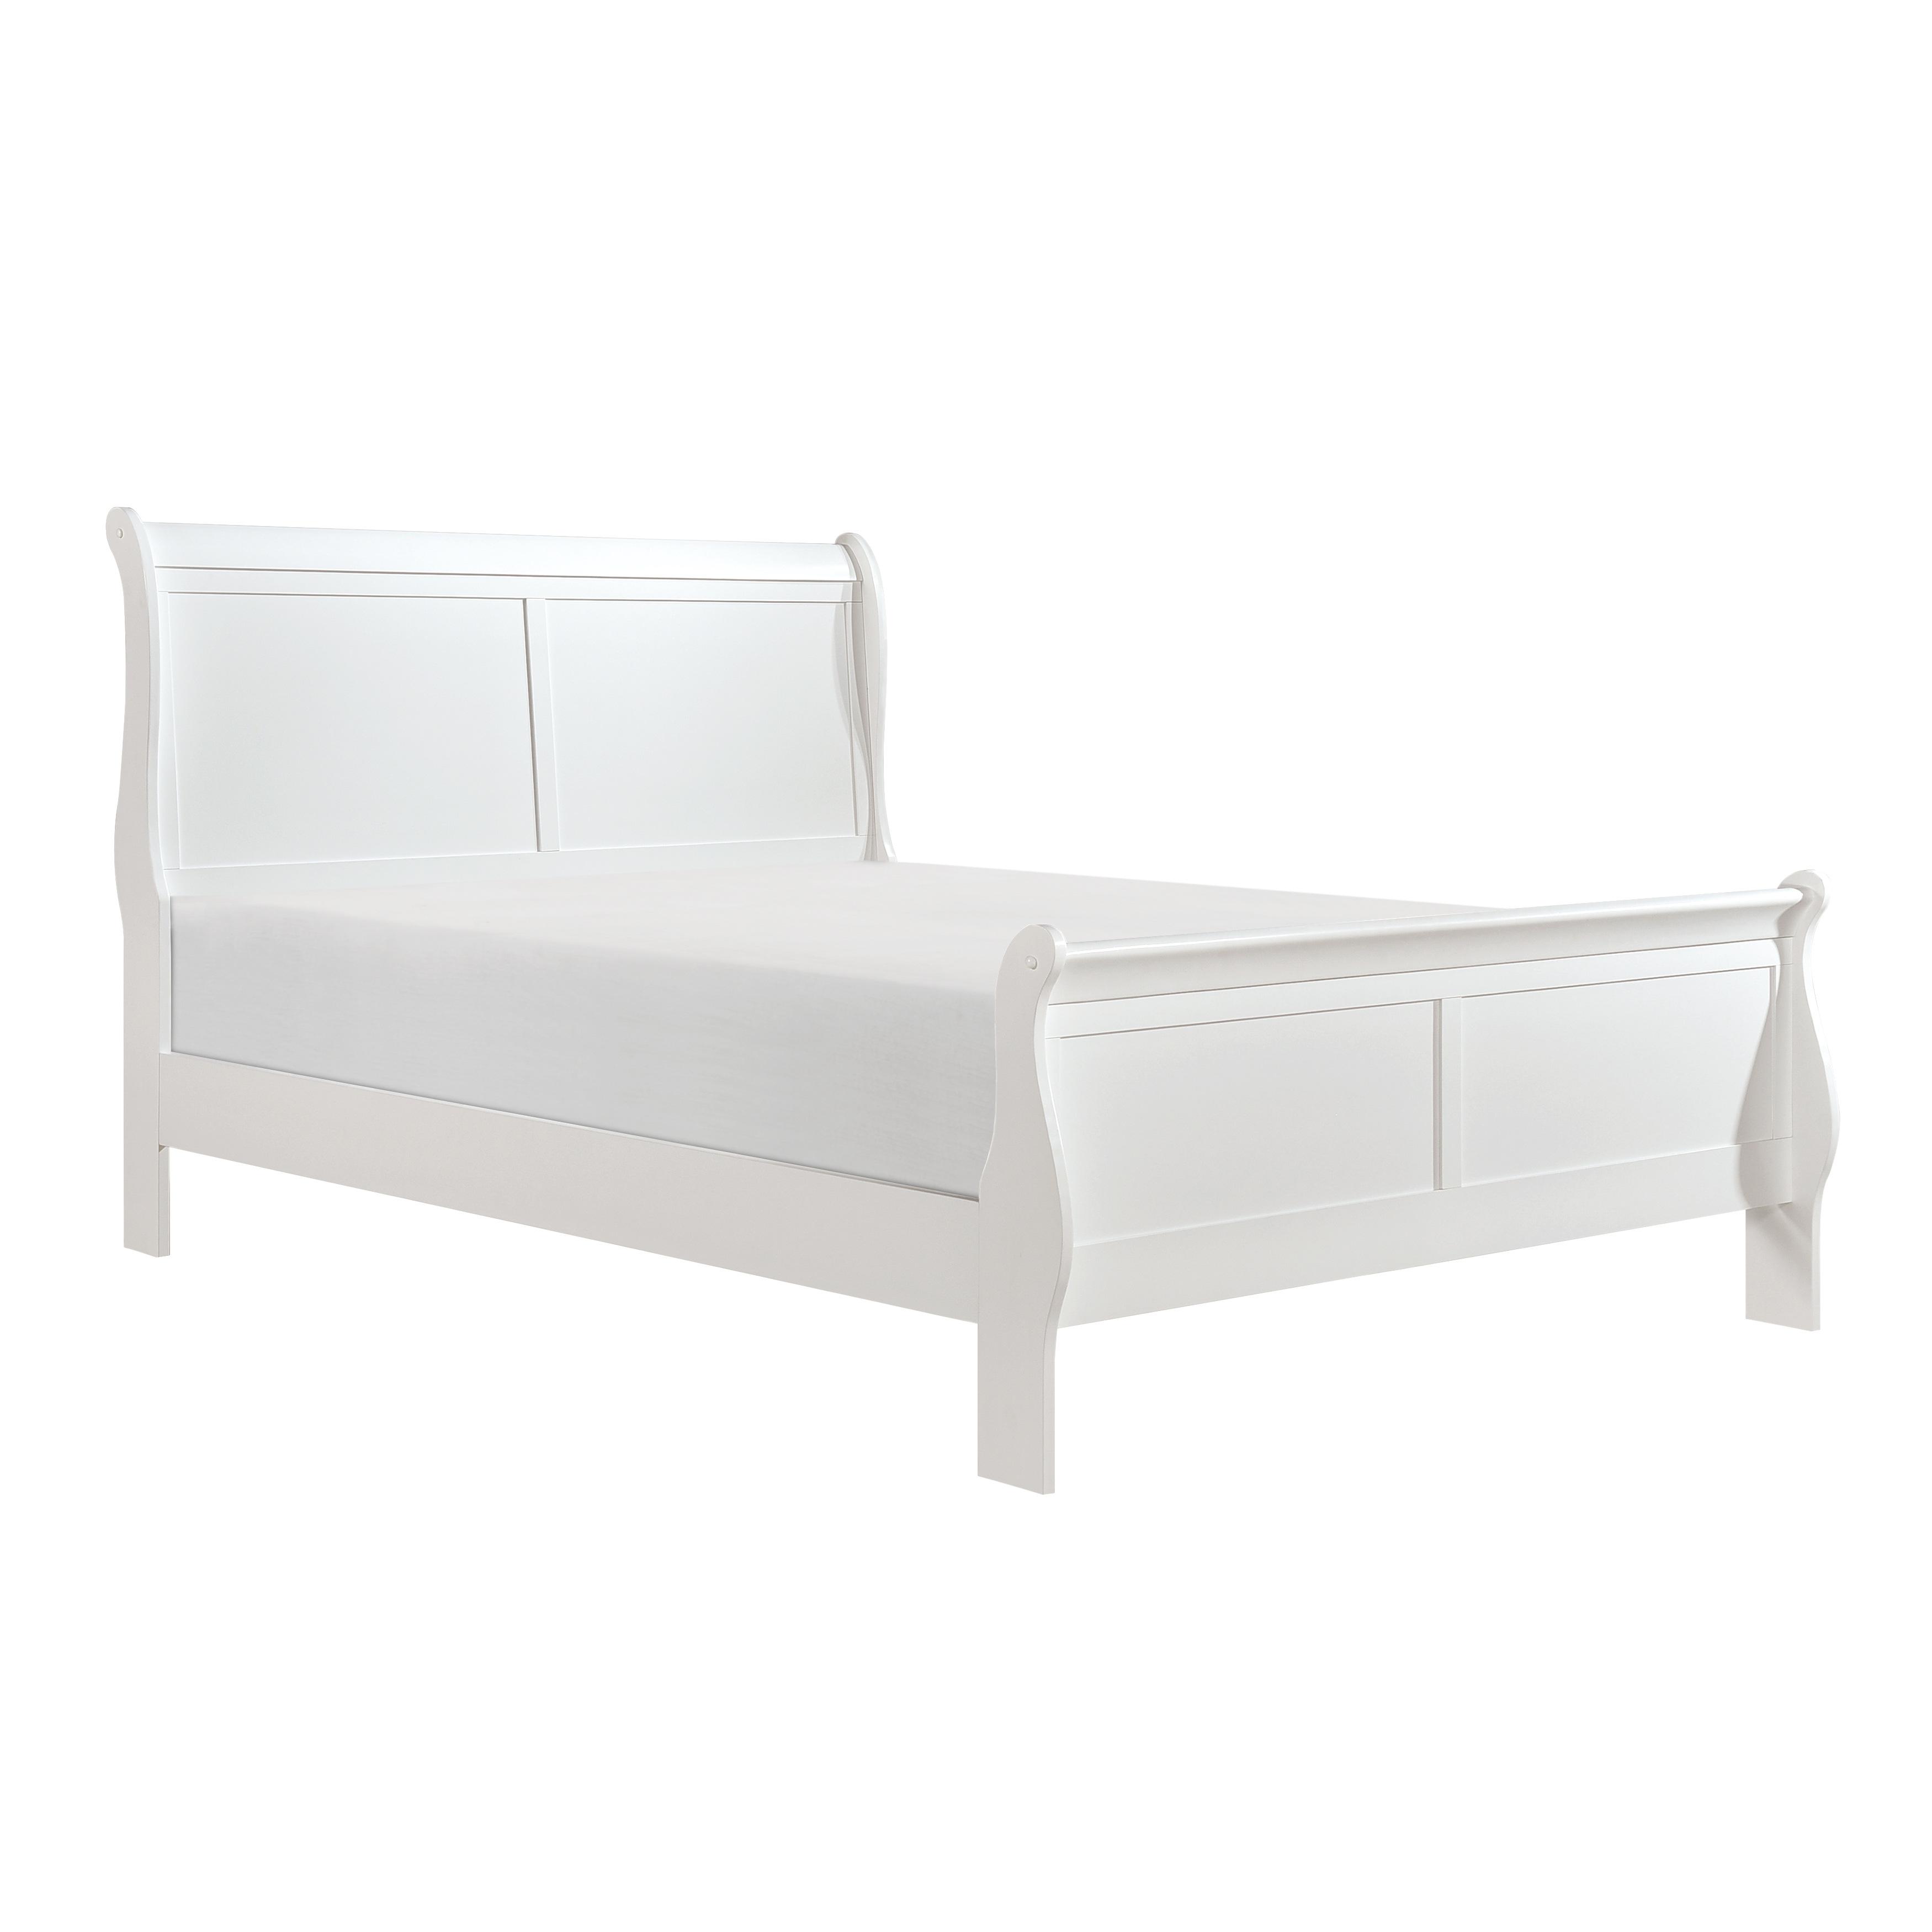 

    
Traditional White Wood CAL Bedroom Set 6pcs Homelegance 2147KW-1CK* Mayville
